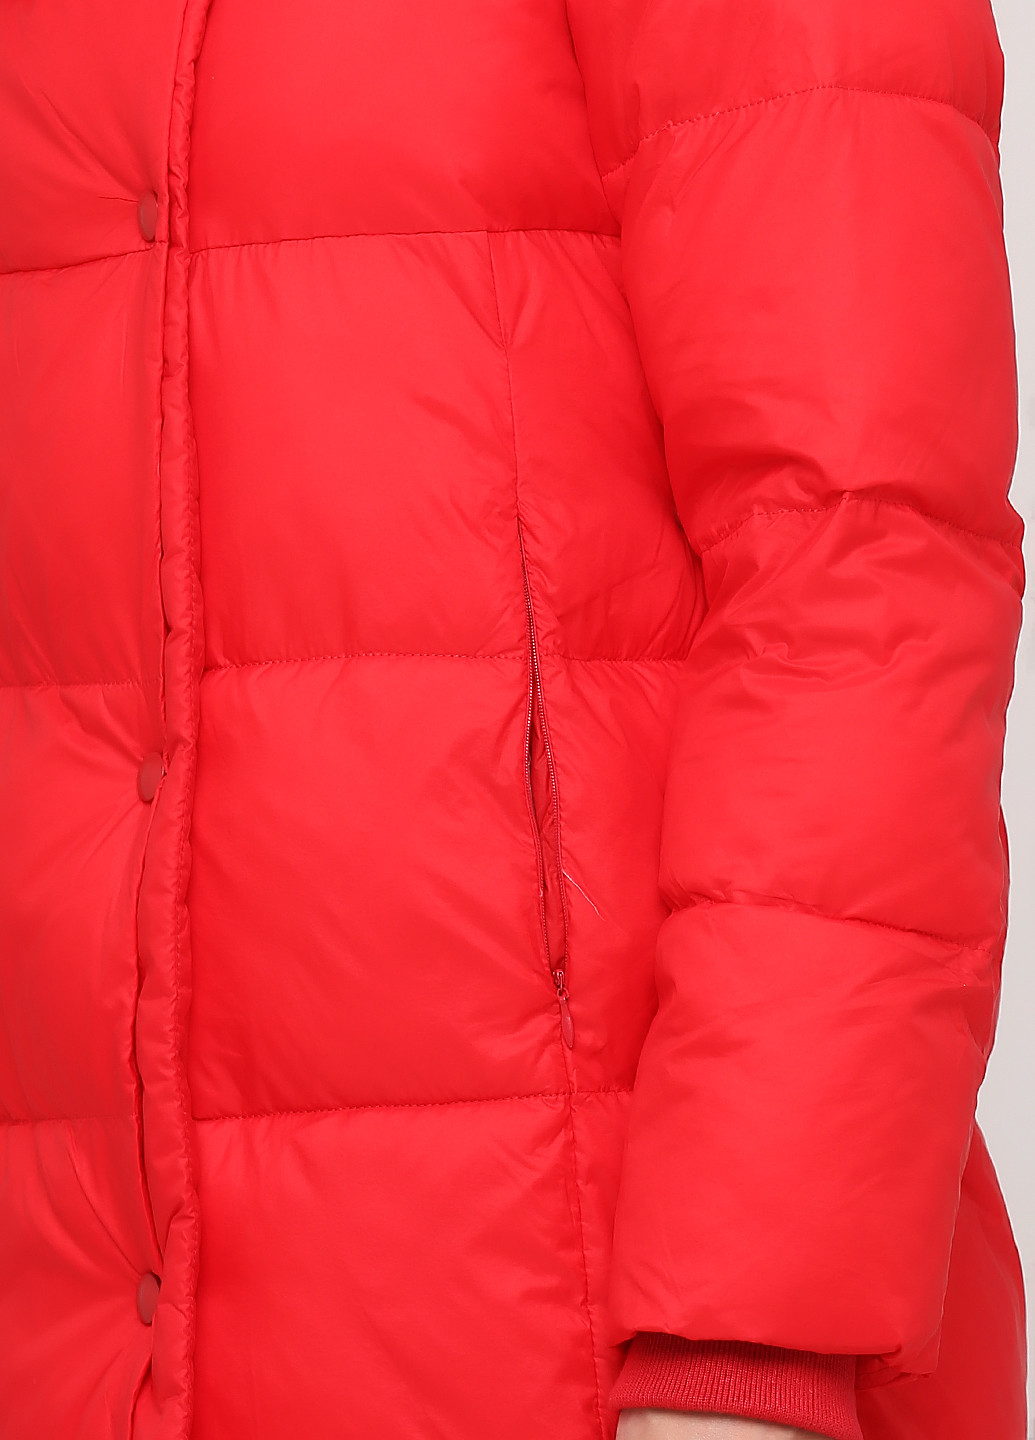 Красная зимняя куртка WINTER LEGEND